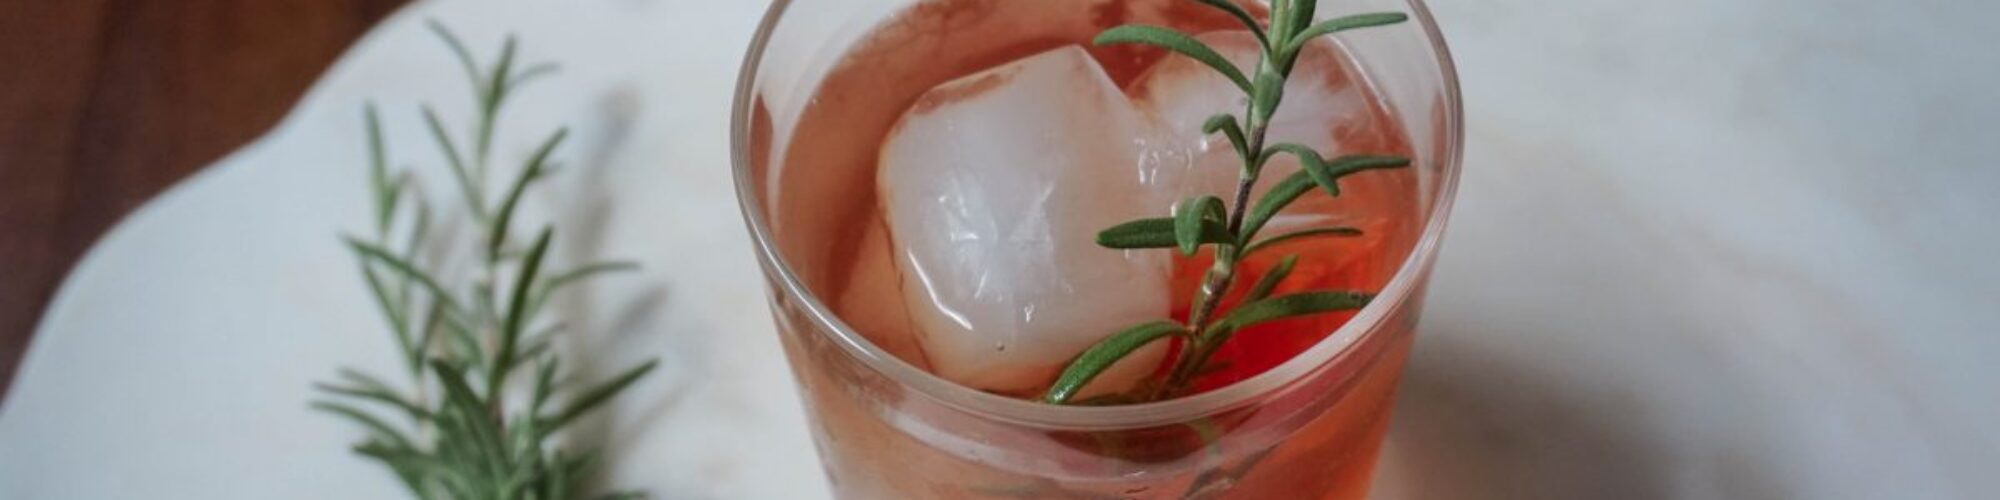 dixie peach ginger vodka cocktail